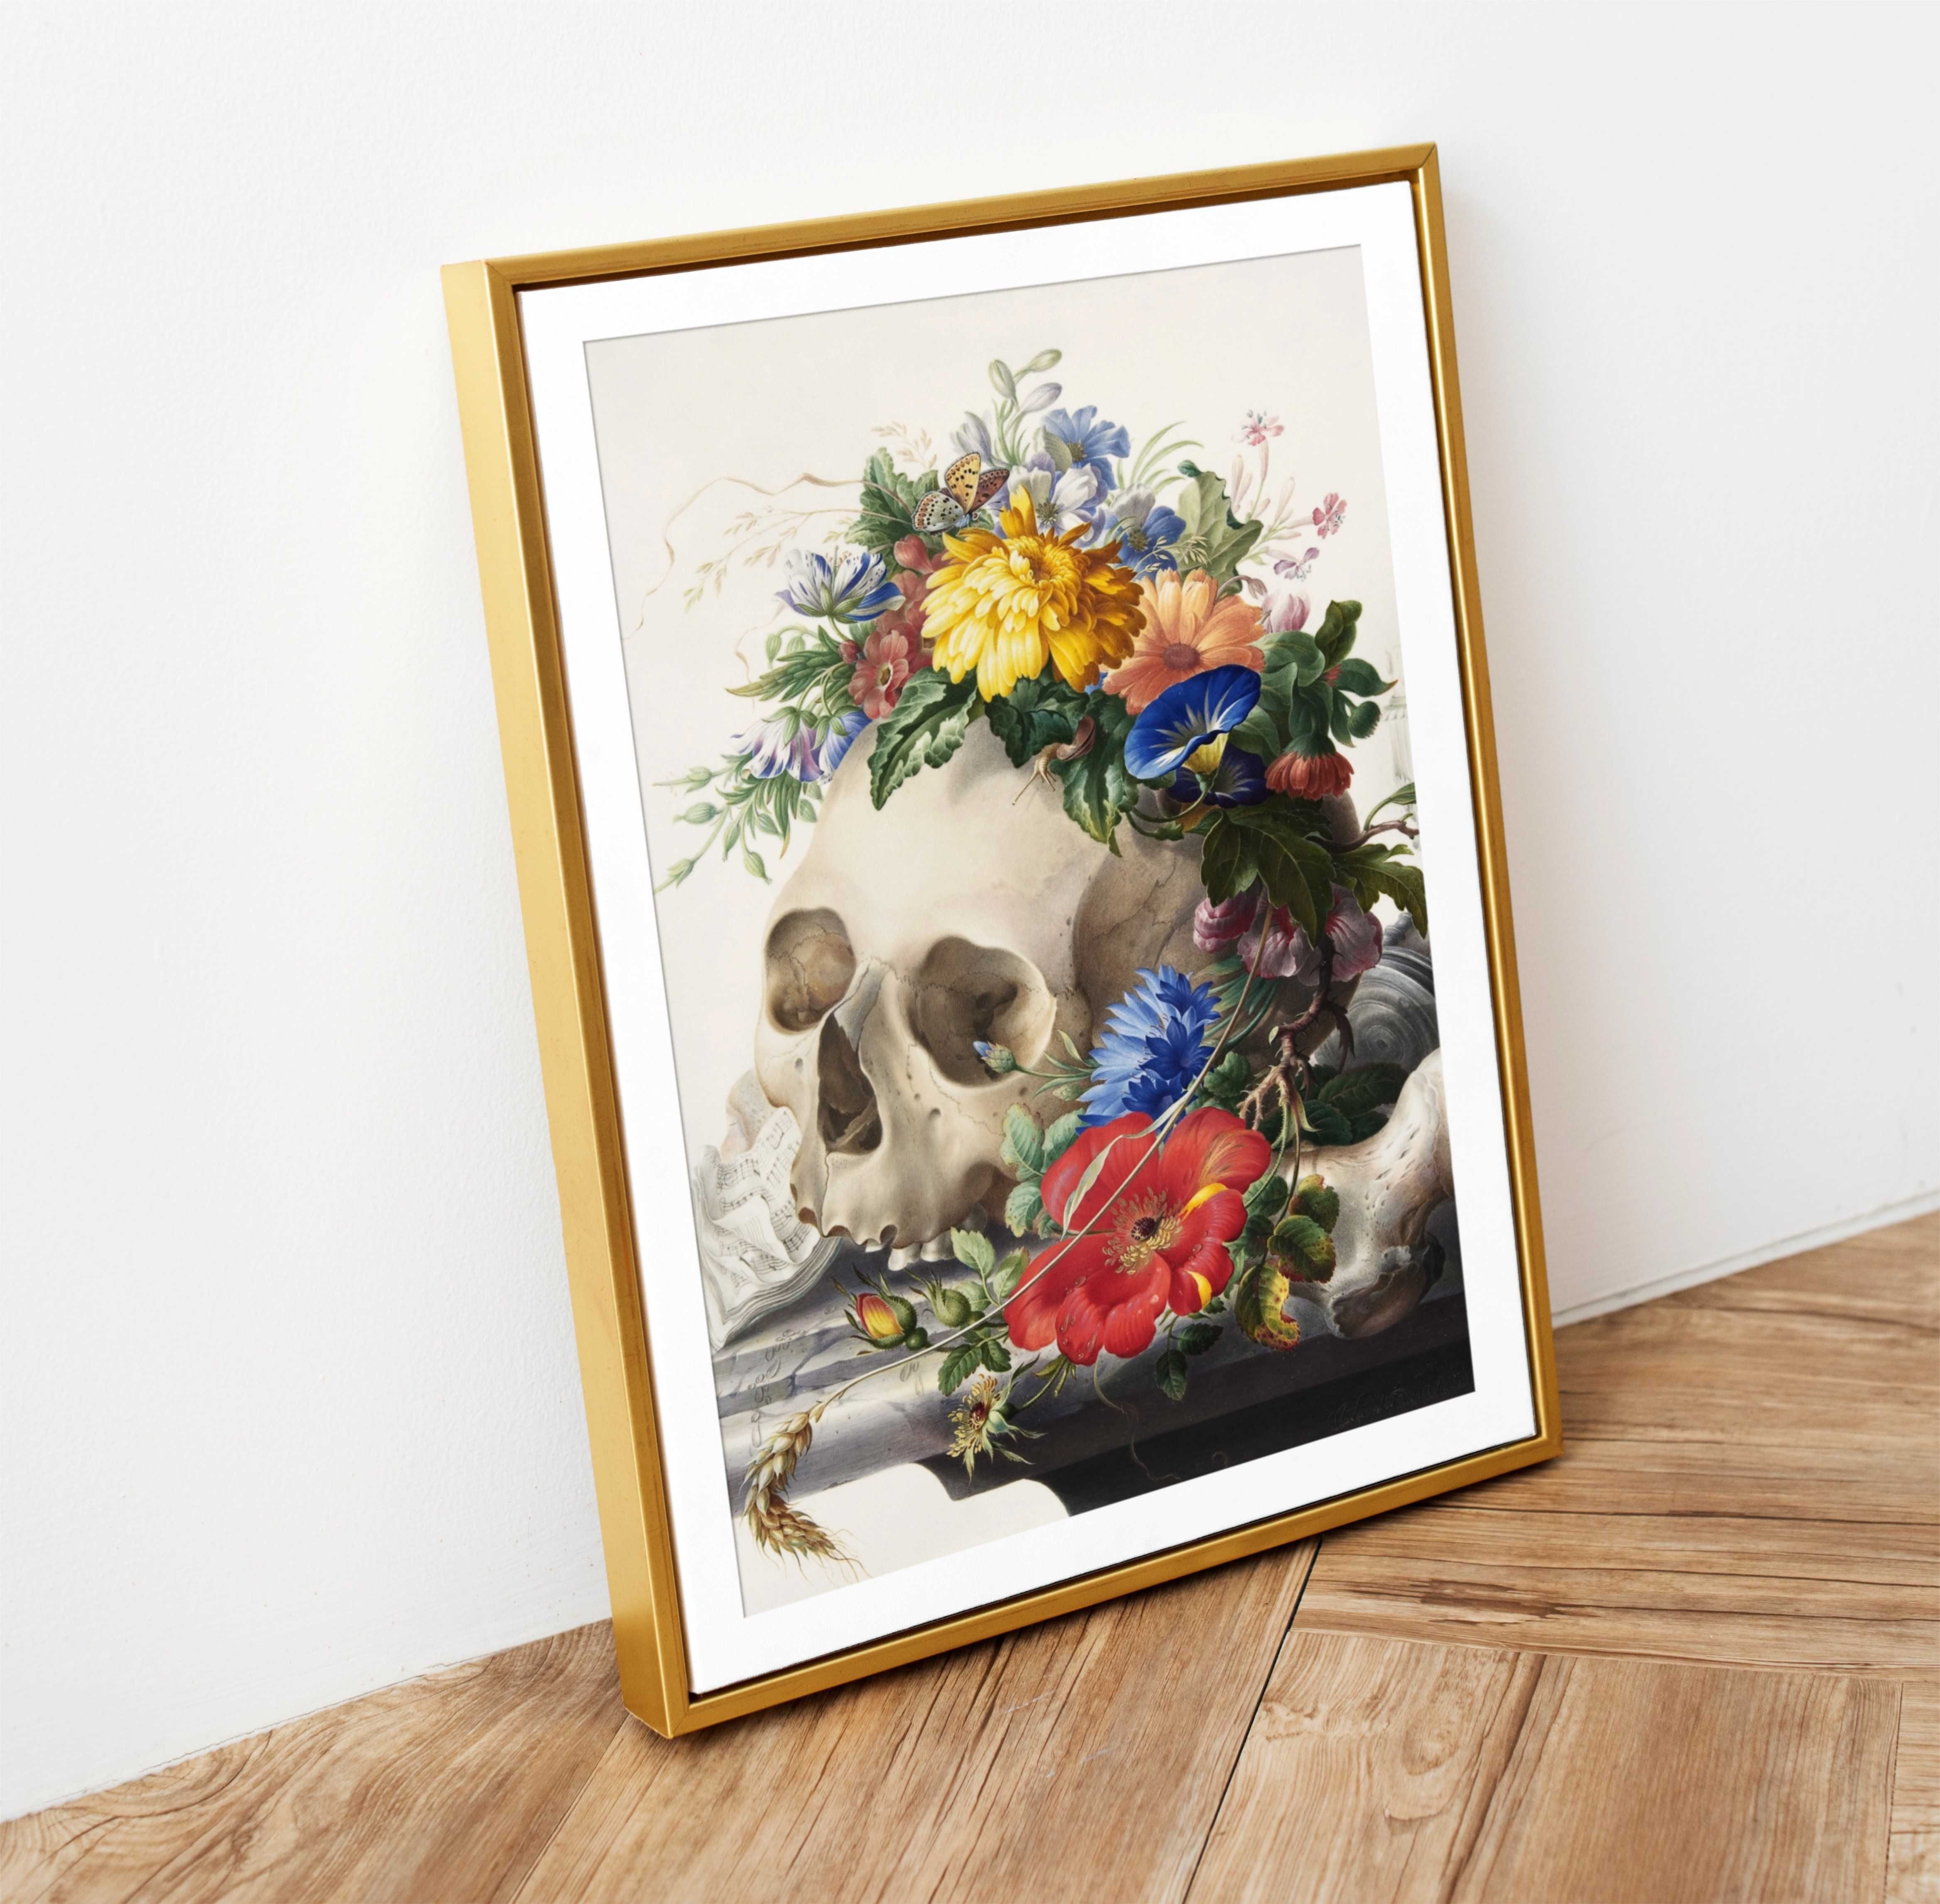 Plakat A3 Vanitas still life - Obraz kwiaty wydruk Henstenburgh#2